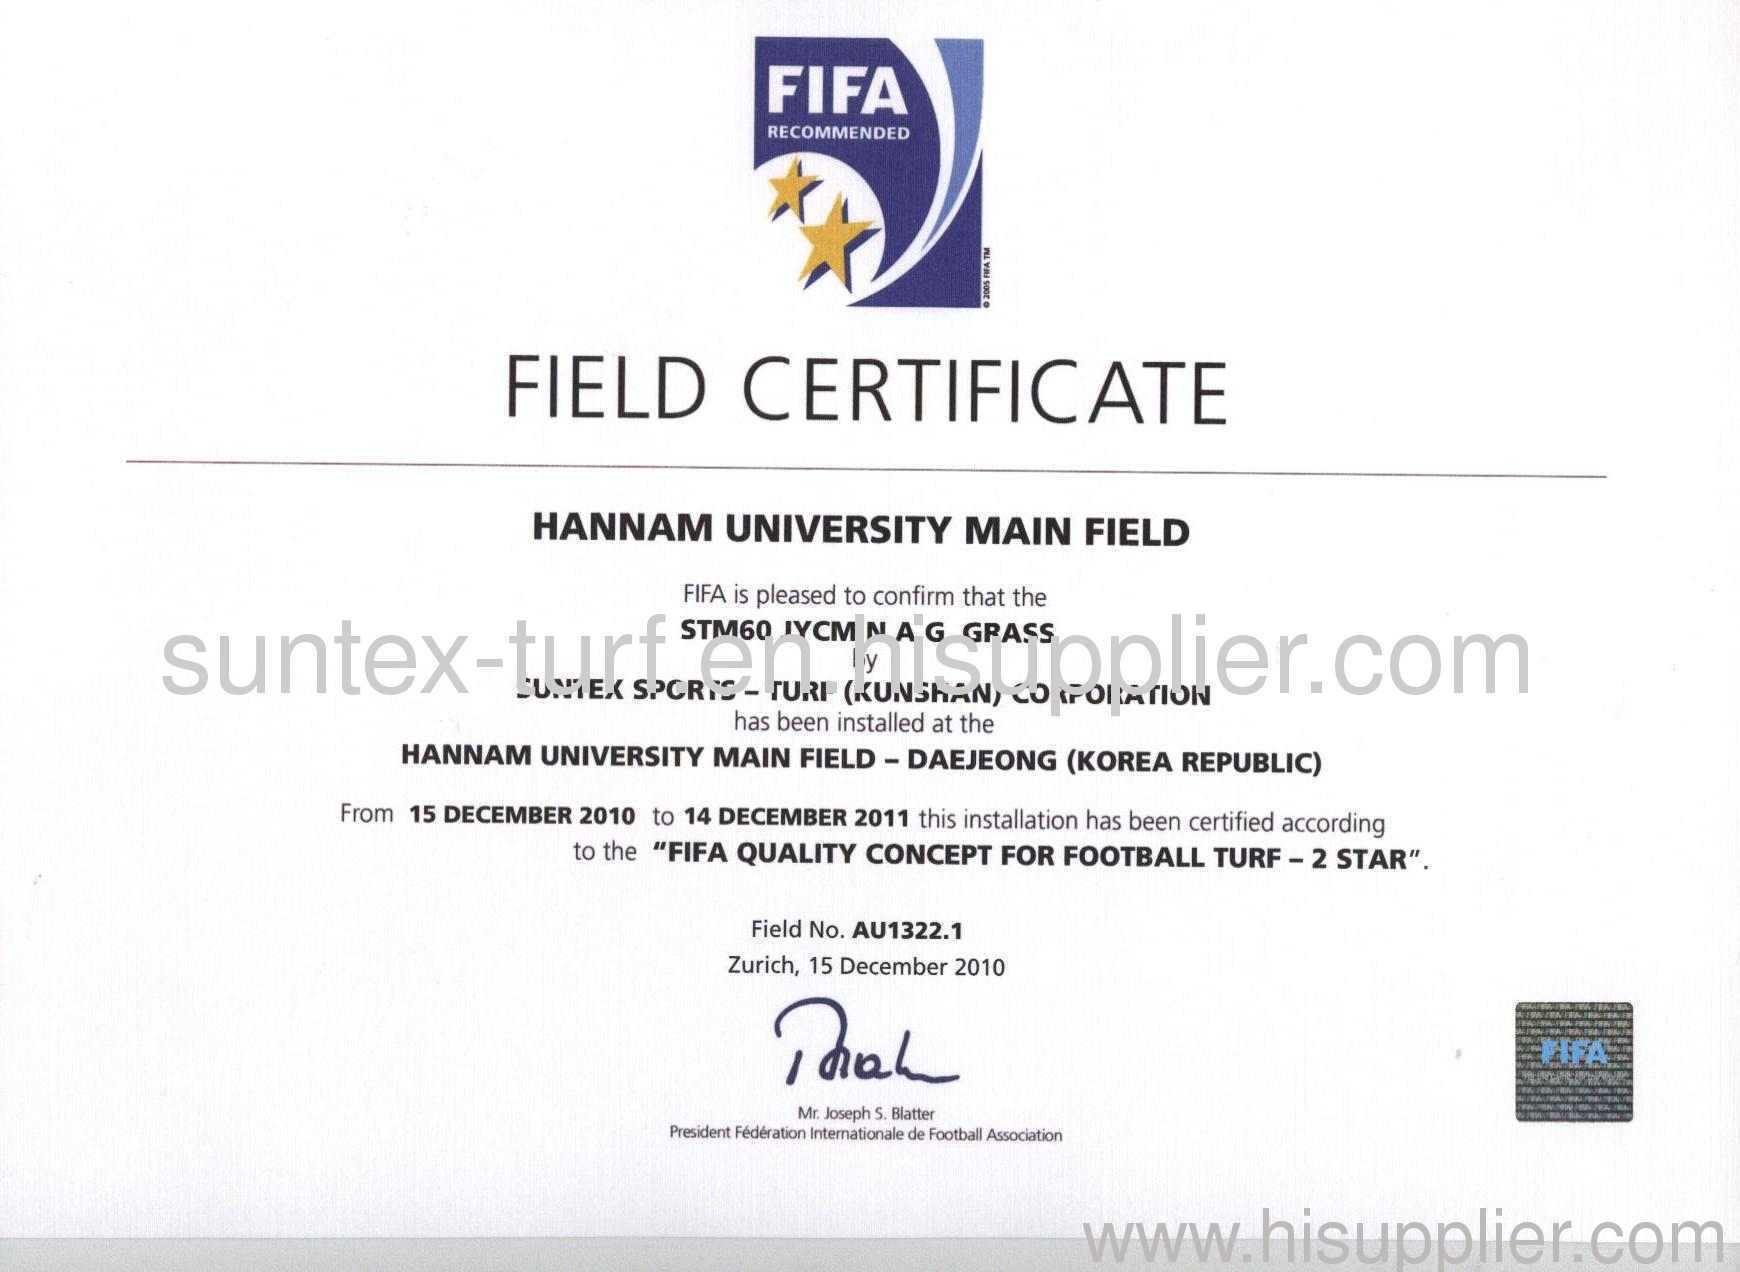 FIFA 2 star field certificate